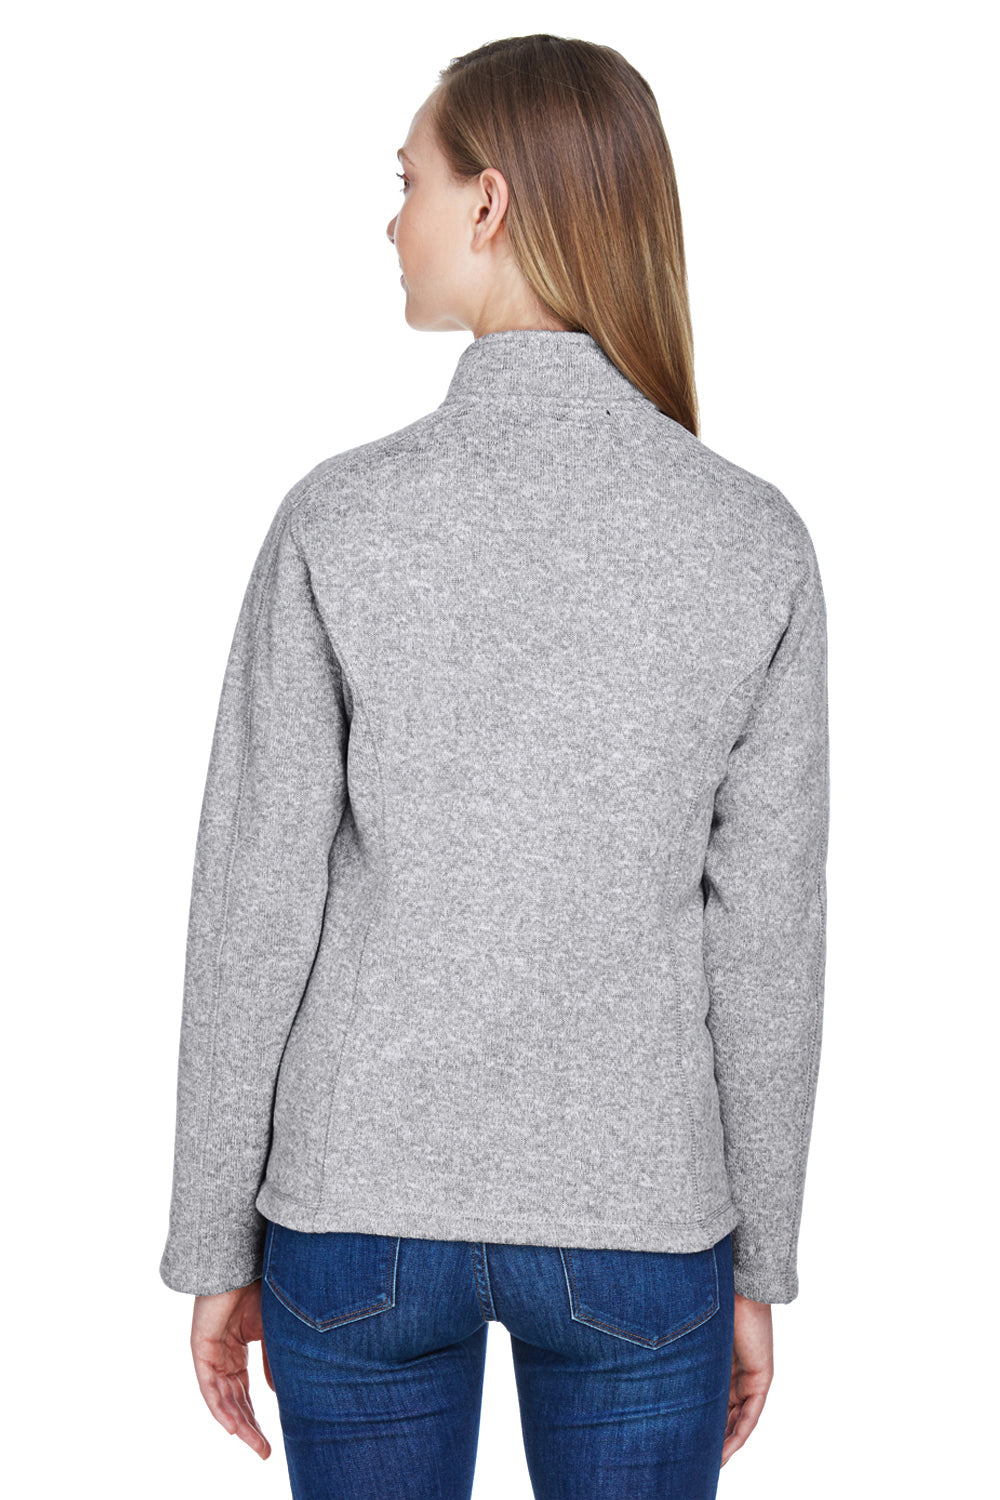 Devon & Jones DG793W Womens Bristol Full Zip Sweater Fleece Jacket Grey Back